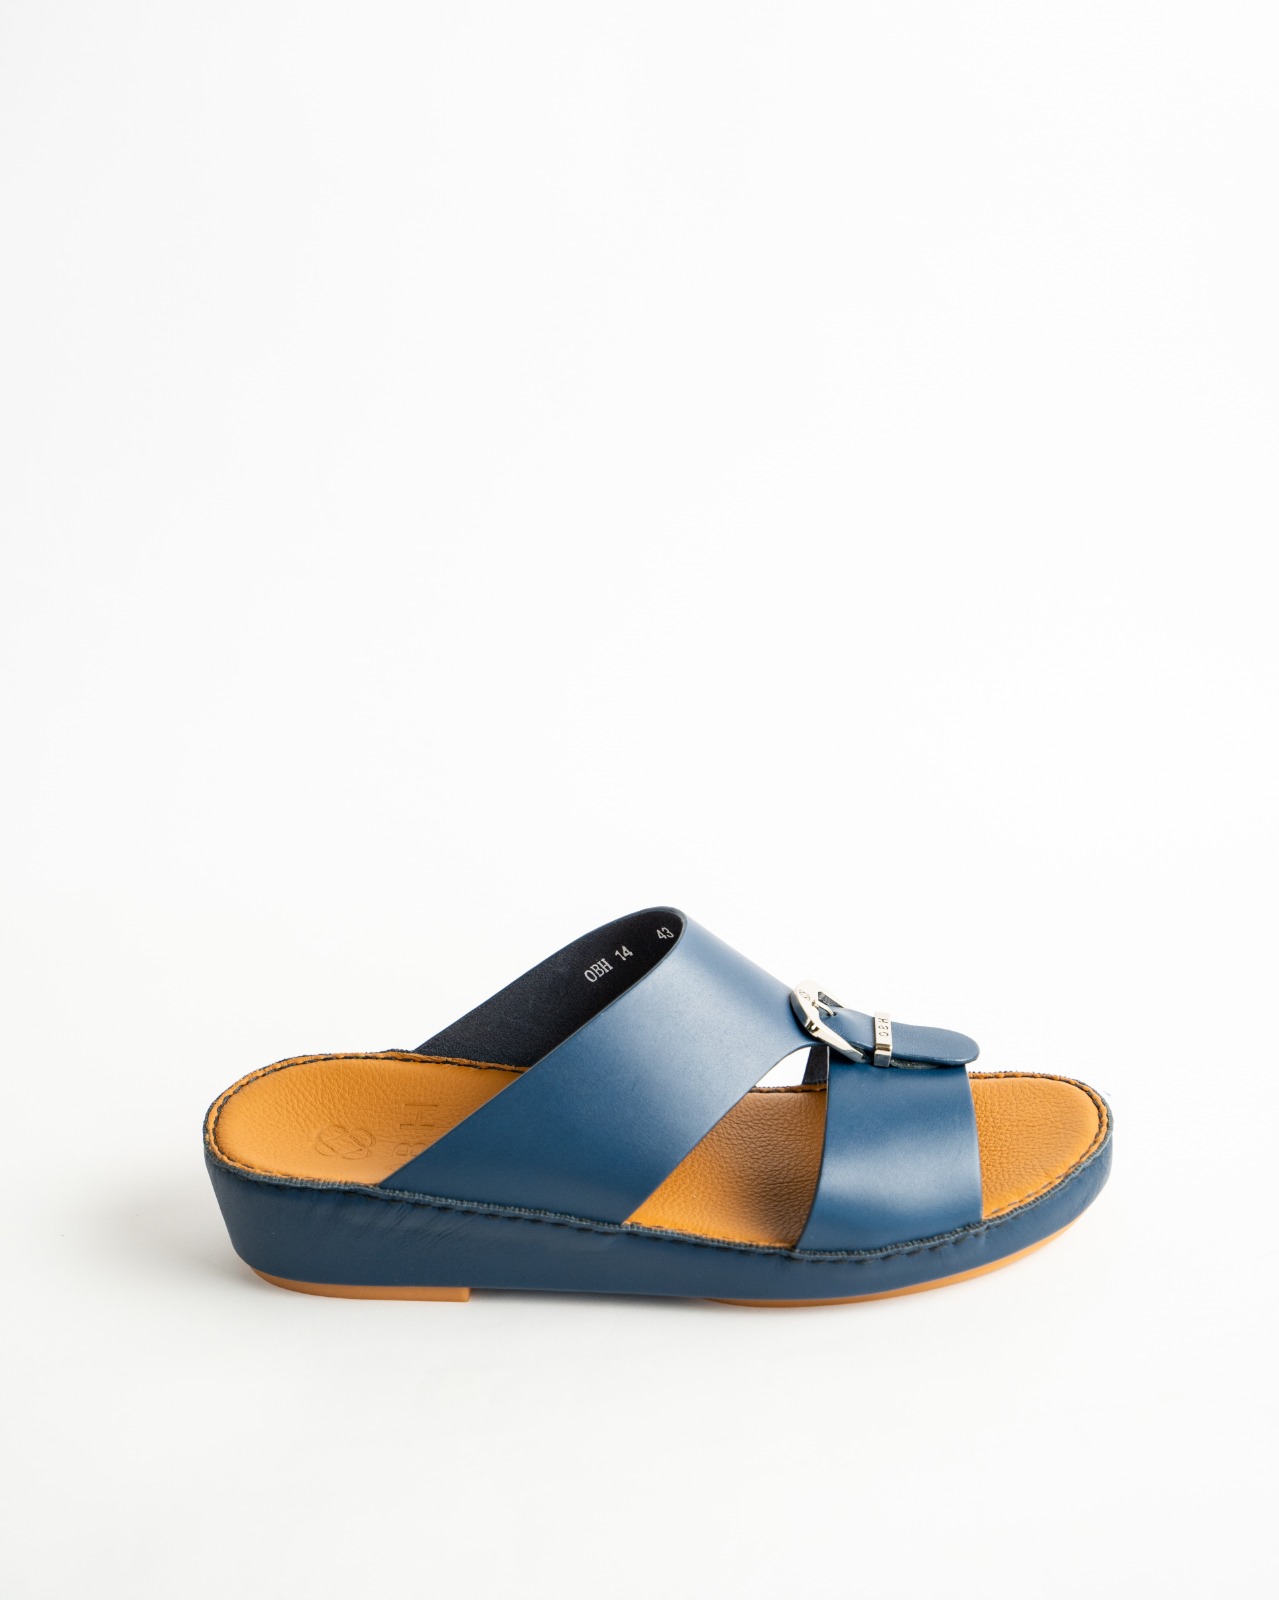 Buy OBH Men Sandals Model 14 Navy Color Online in UAE | OBH Collection